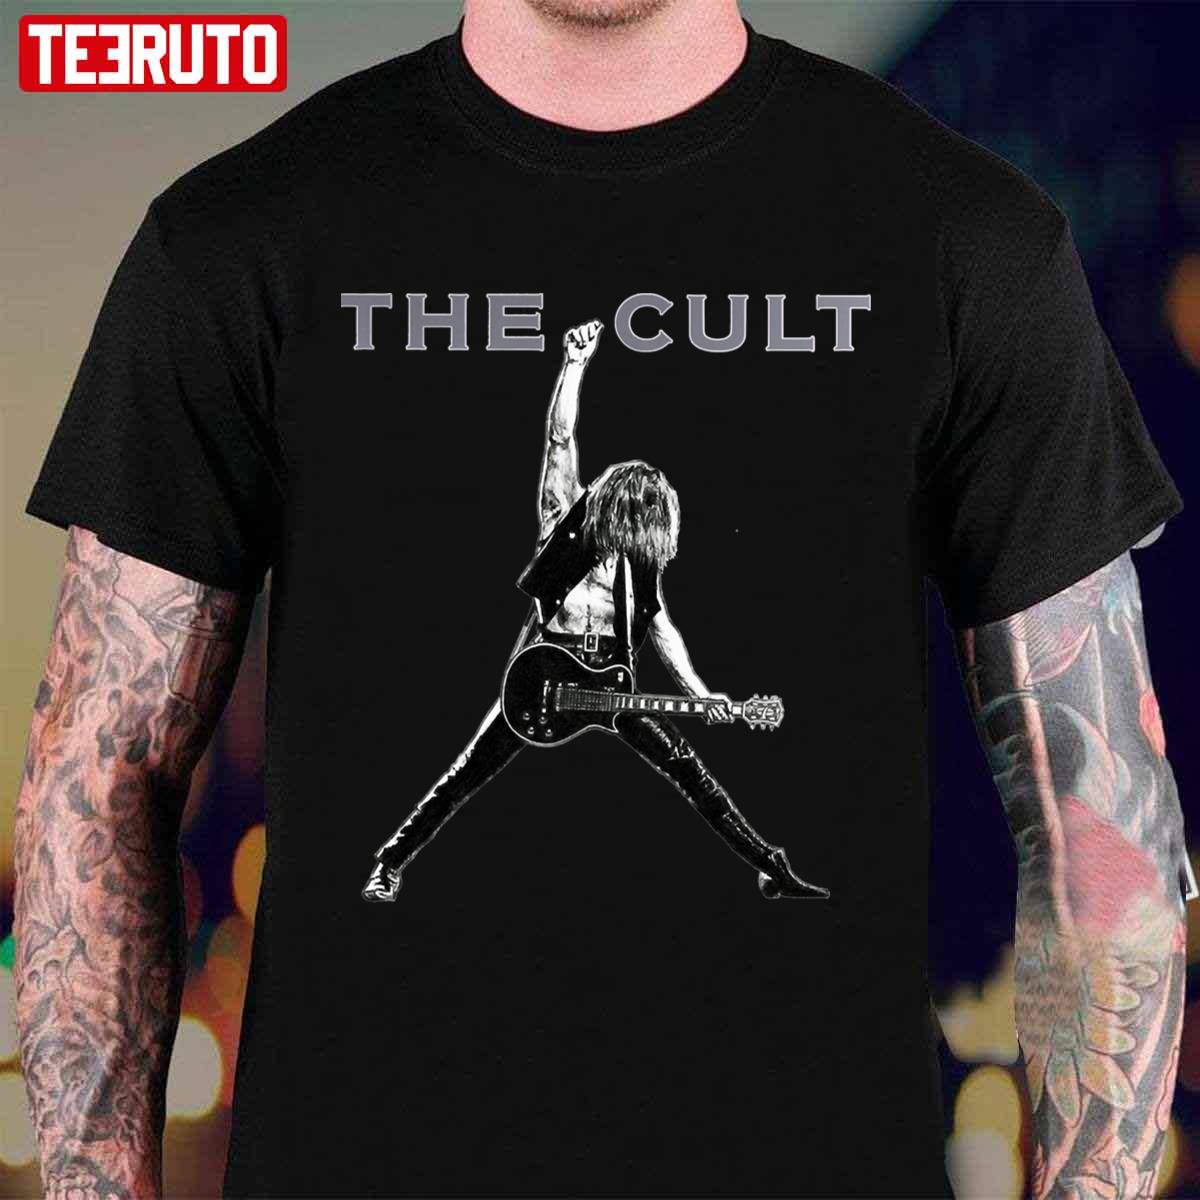 The Cult Billy Duffy Guitarist Unisex Sweatshirt